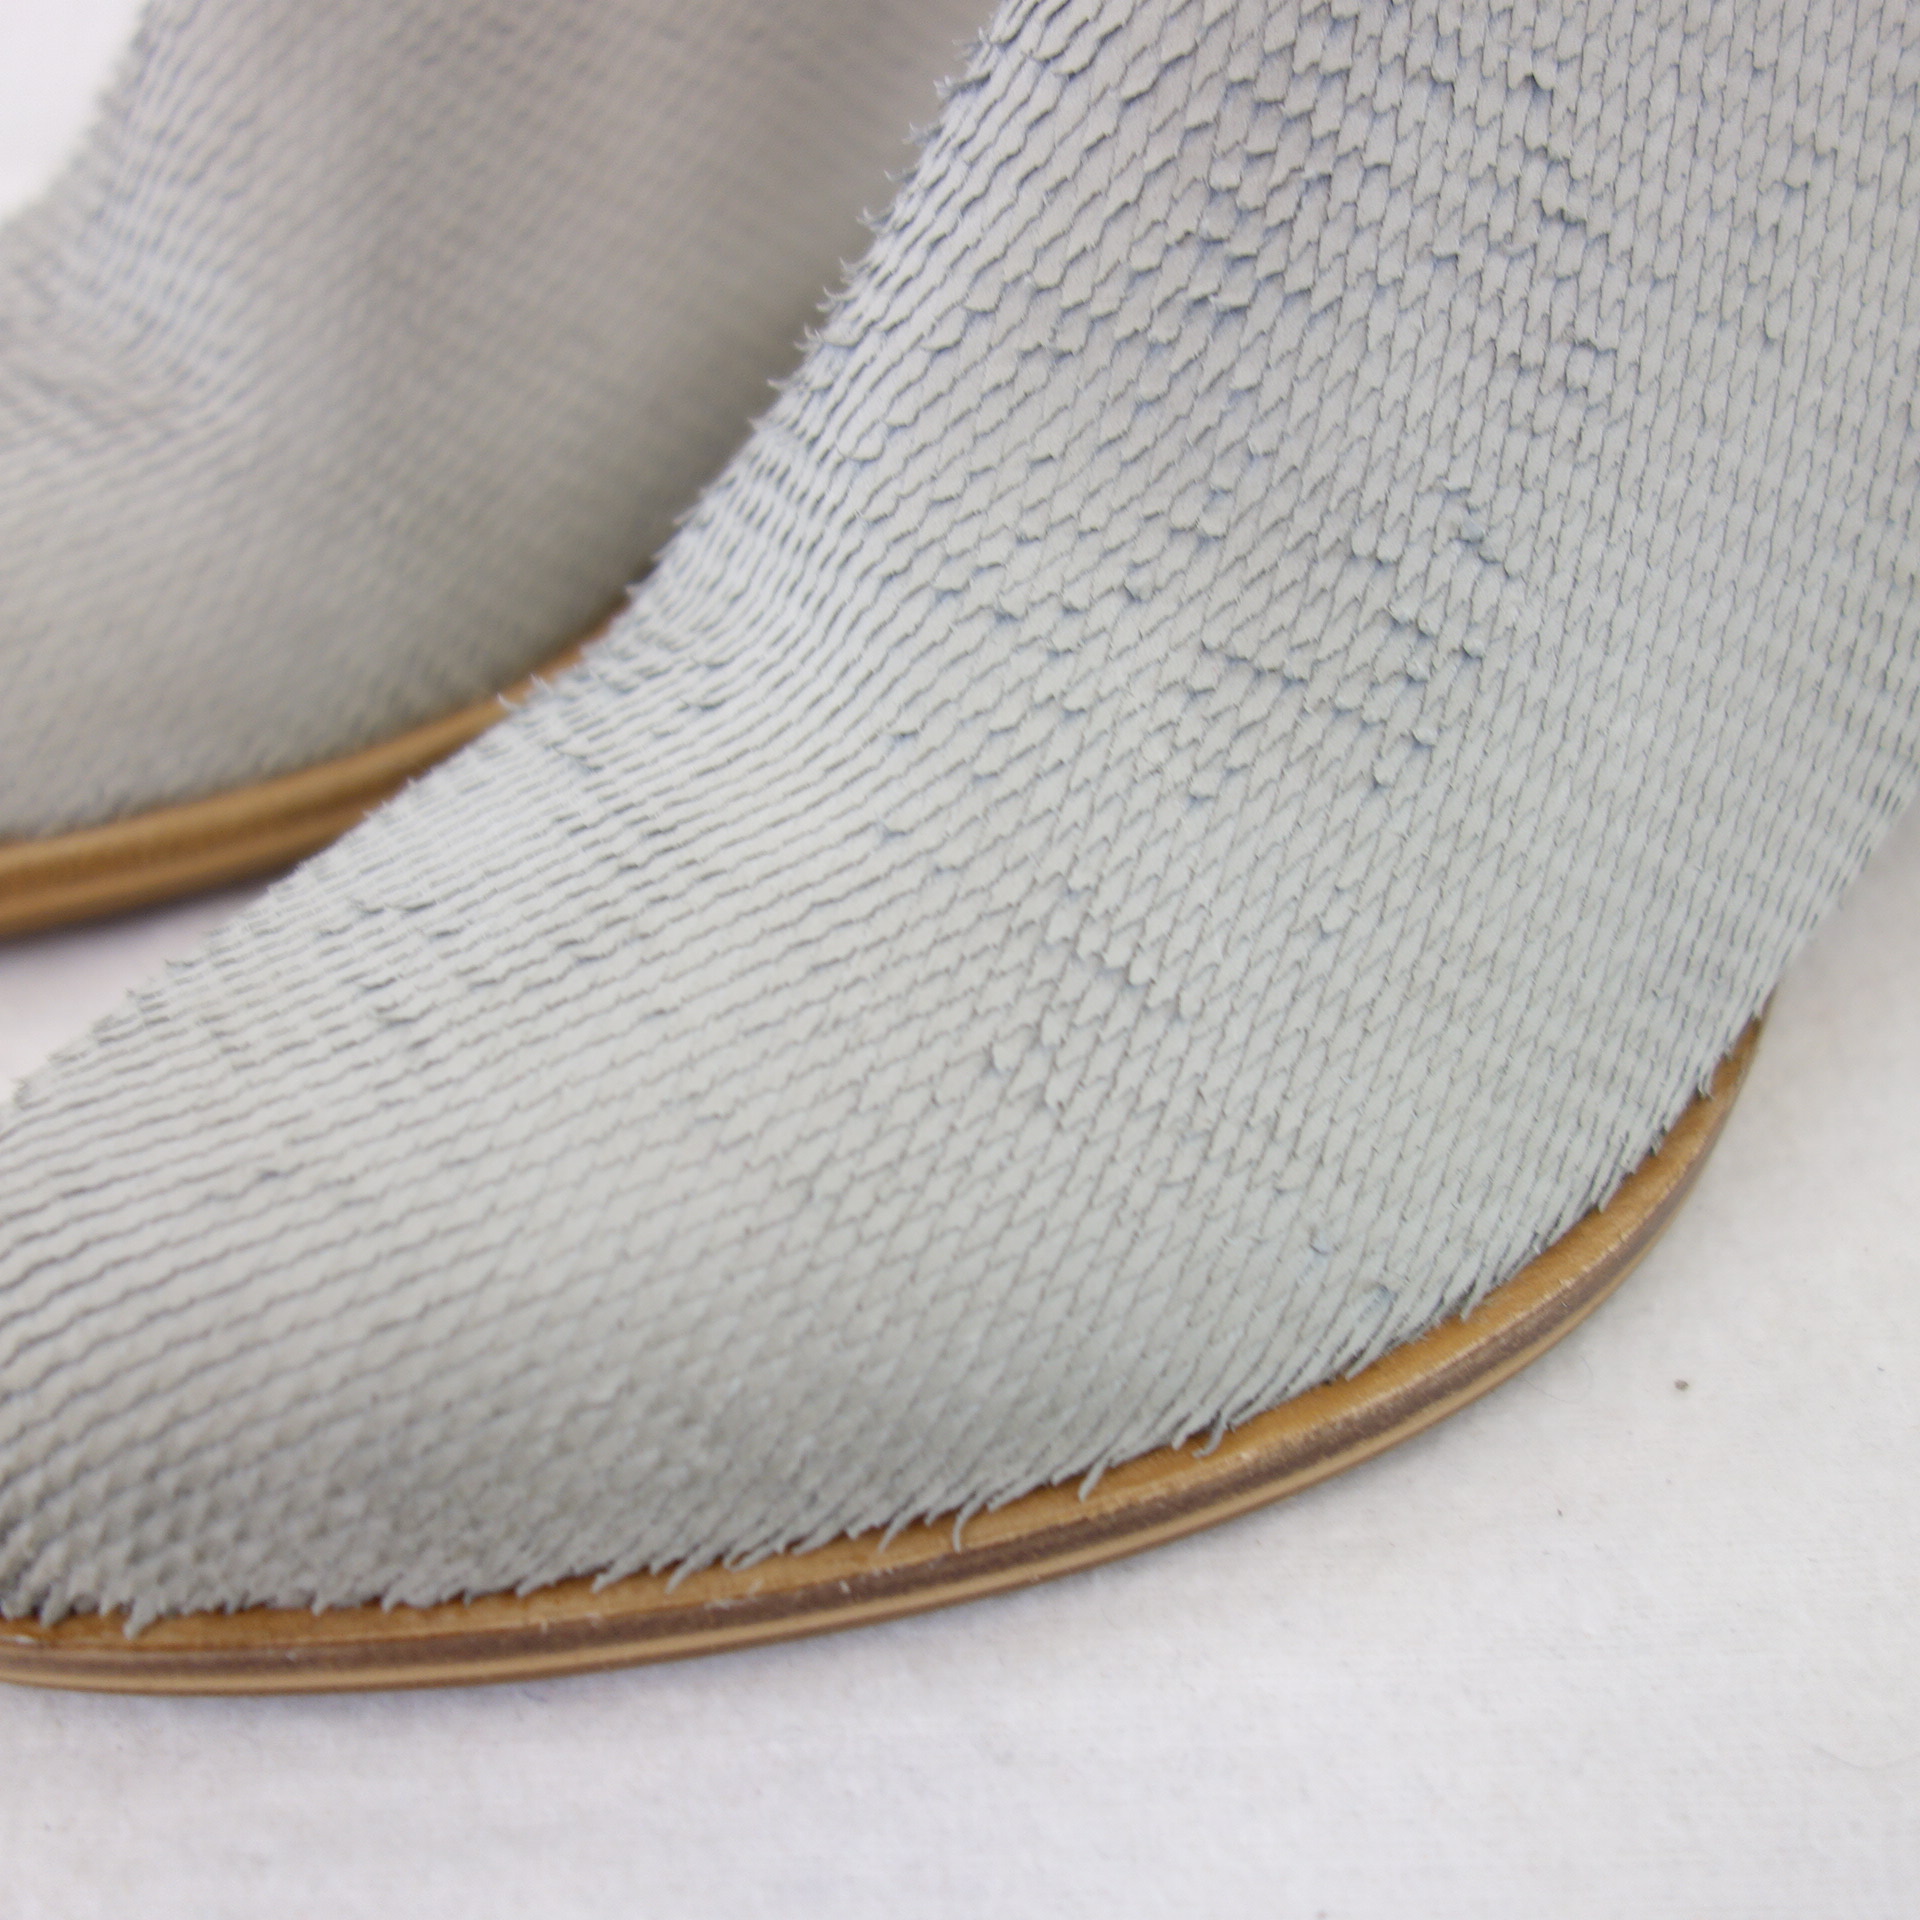 BRUNO PREMI Damen Schuhe Chelsea Ankle Boots Stiefeletten Stiefel Leder Grau Größe 41 ( 40 )